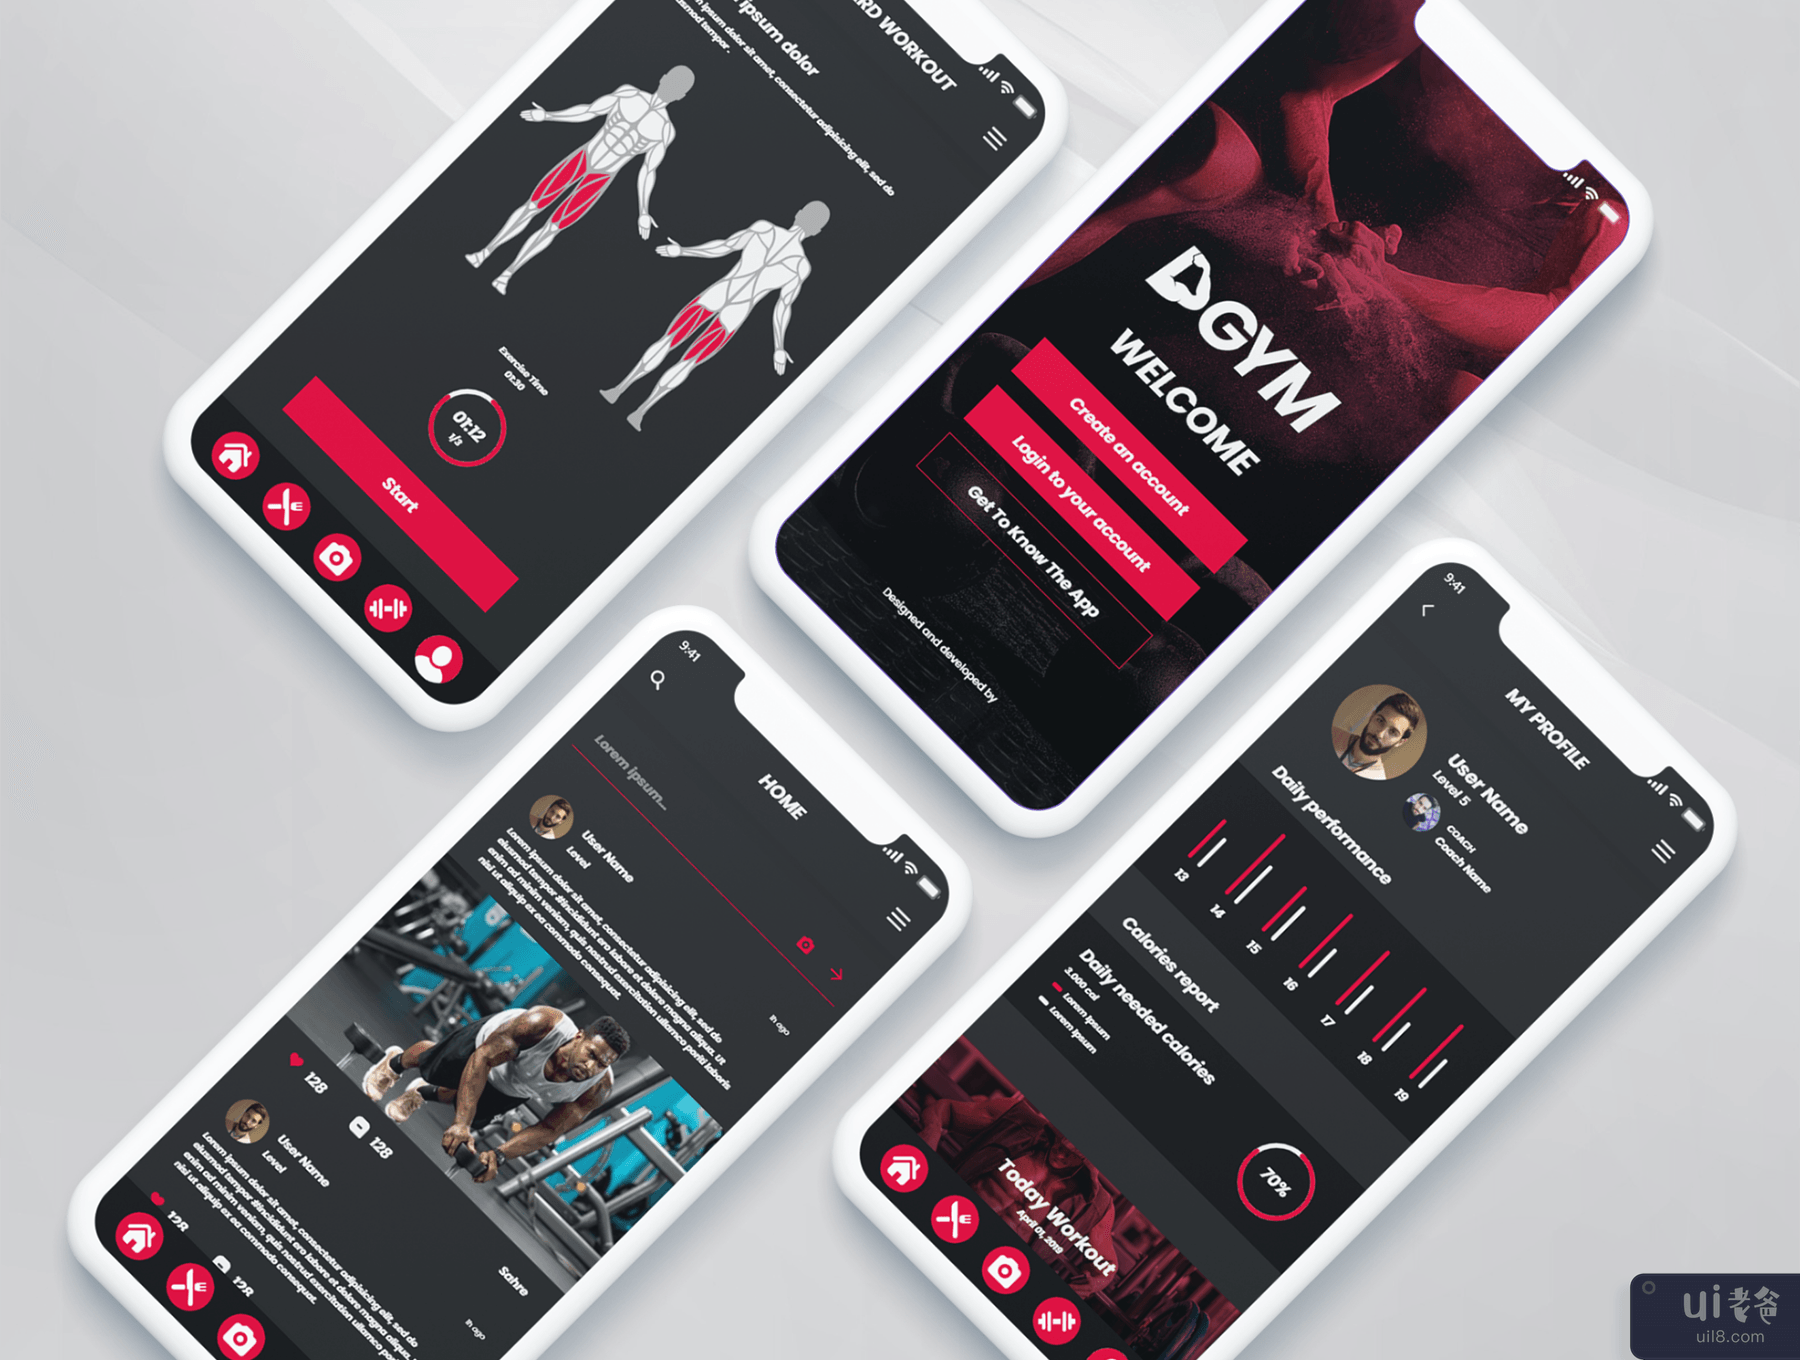 DGYM 健身和锻炼移动应用程序 UI 套件(DGYM Fitness and Workout Mobile Application UI Kit)插图